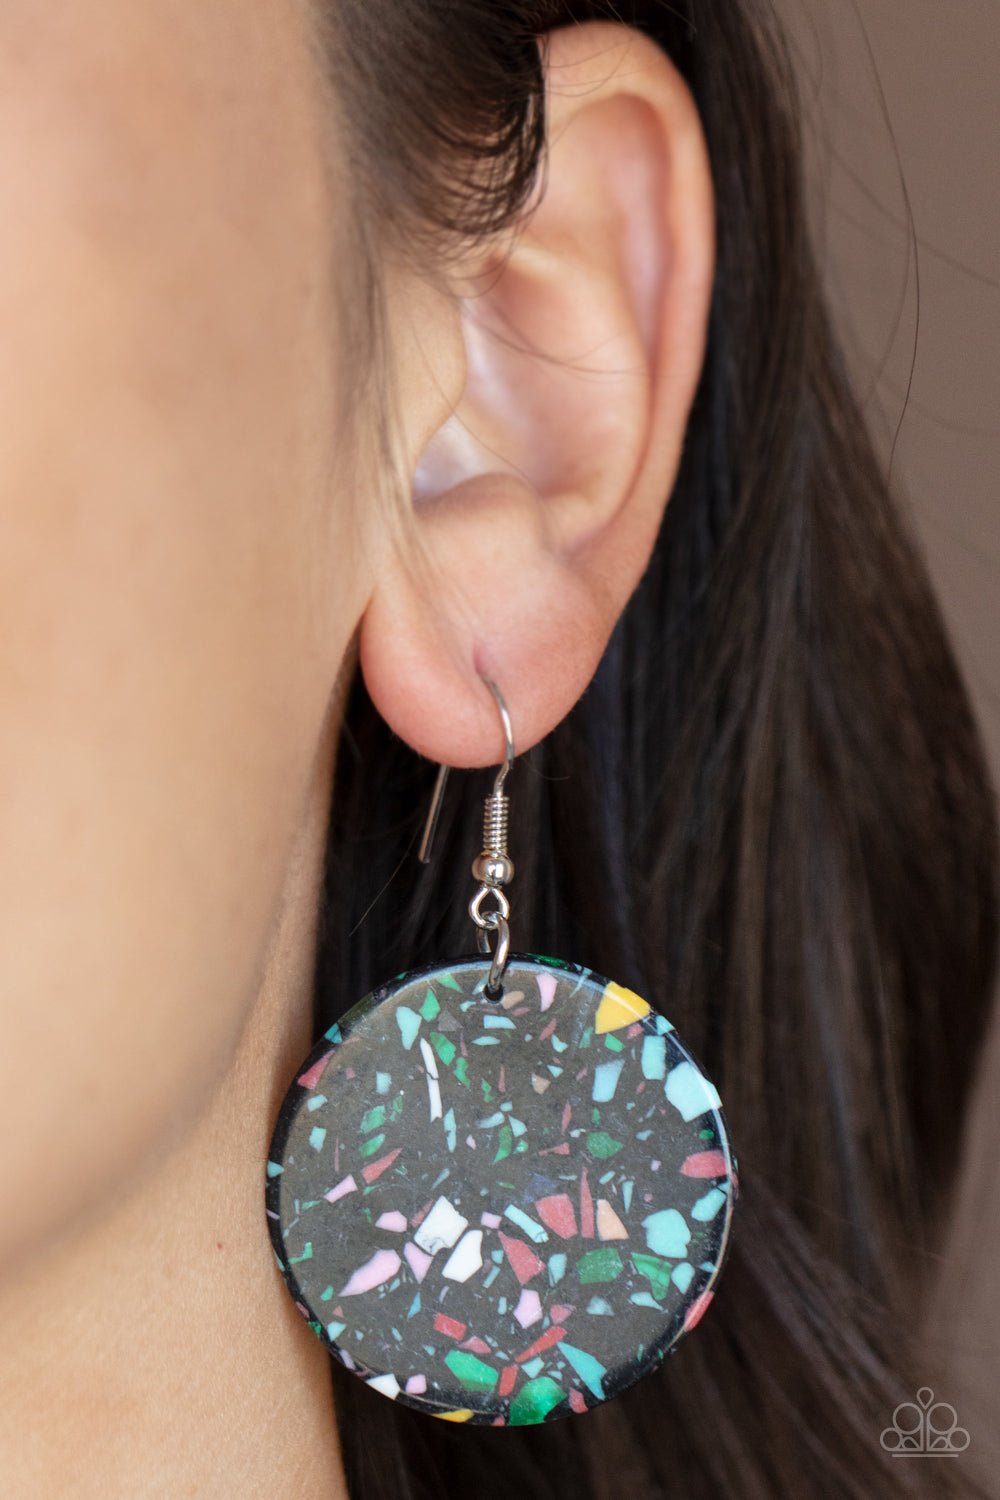 Tenaciously Terrazzo - Black/Multicolor earrings